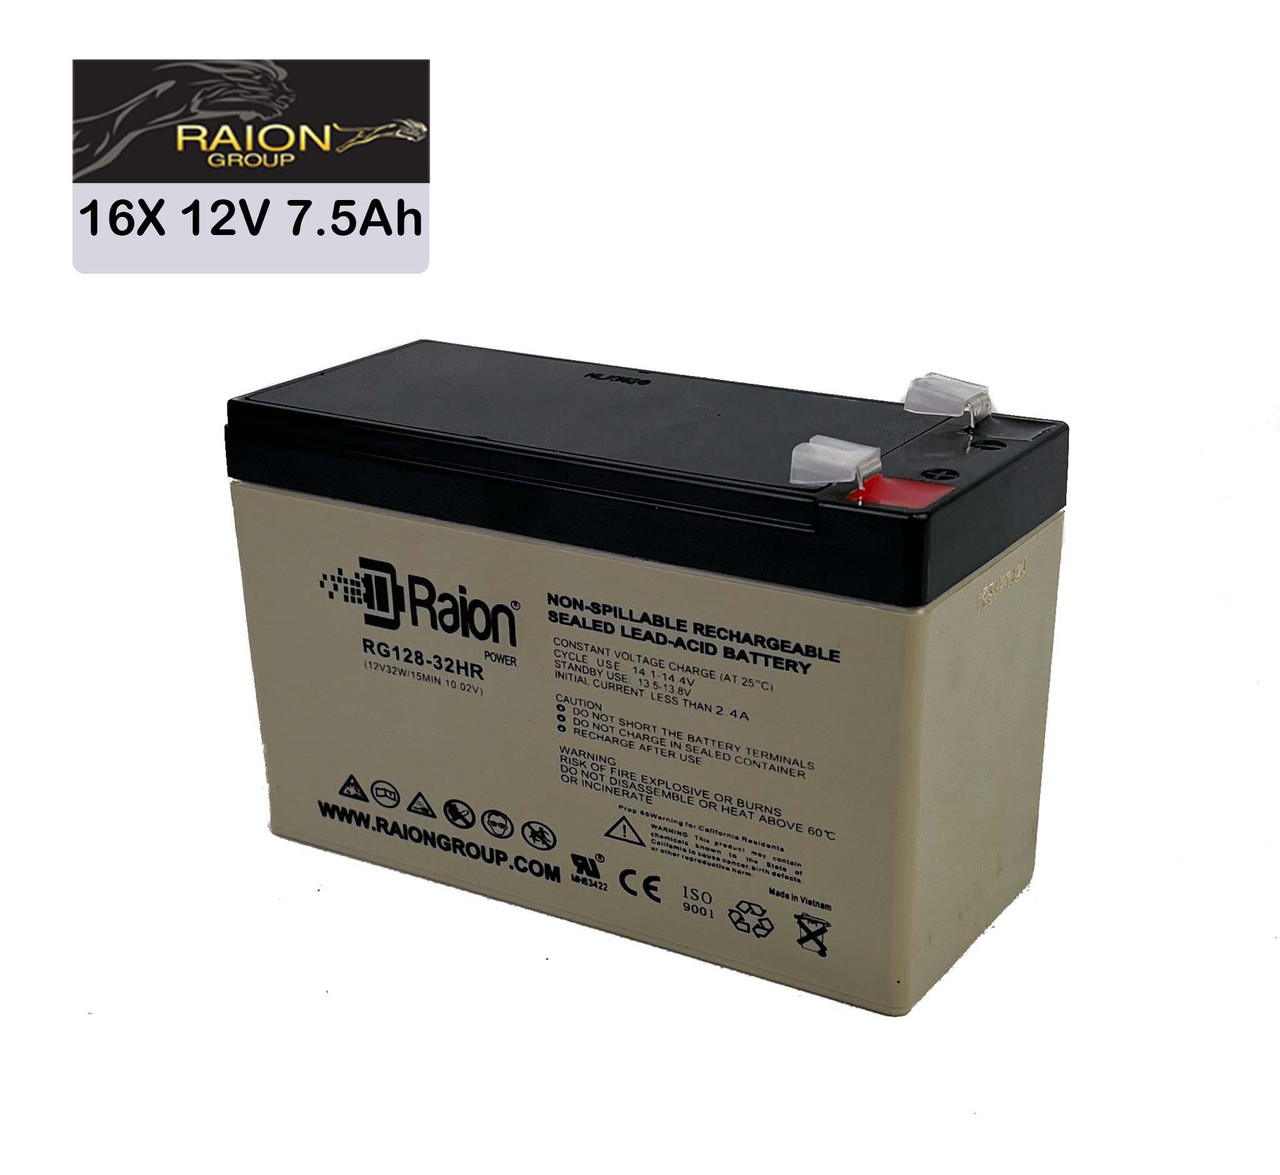 Raion Power 12V 7.5Ah High Rate Discharge UPS Batteries for Powerware PW9120-BATT2000 - 16 Pack